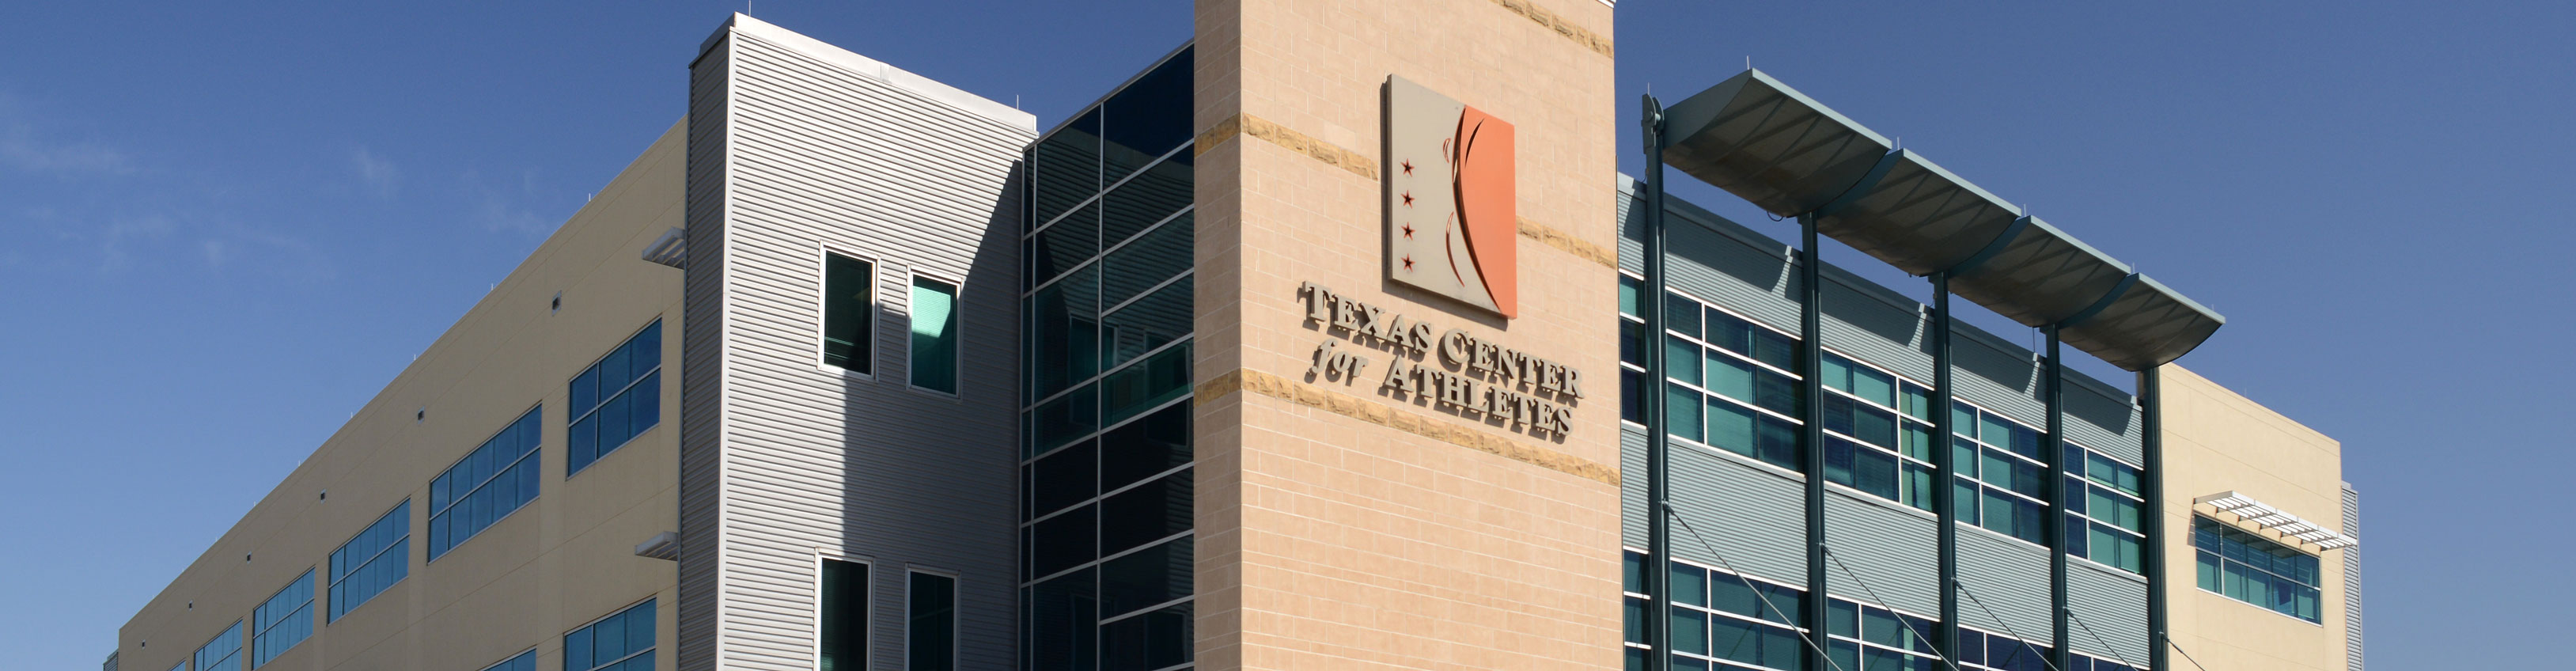 Texas Center or Athletes building exterior